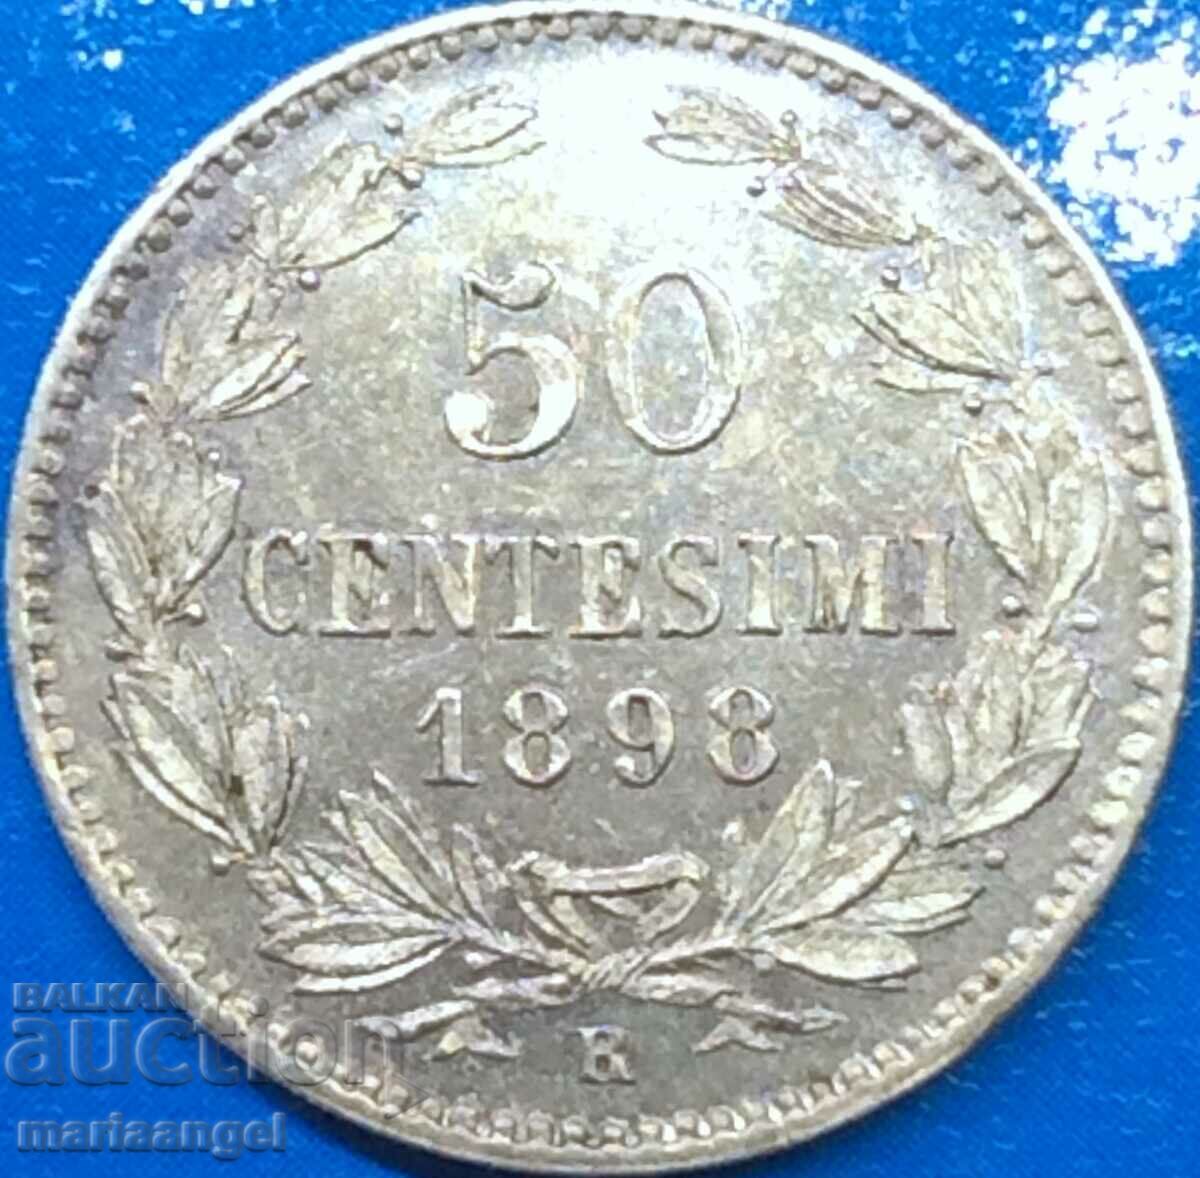 50 centesimi 1898 San Marino UNC PROOF-like silver